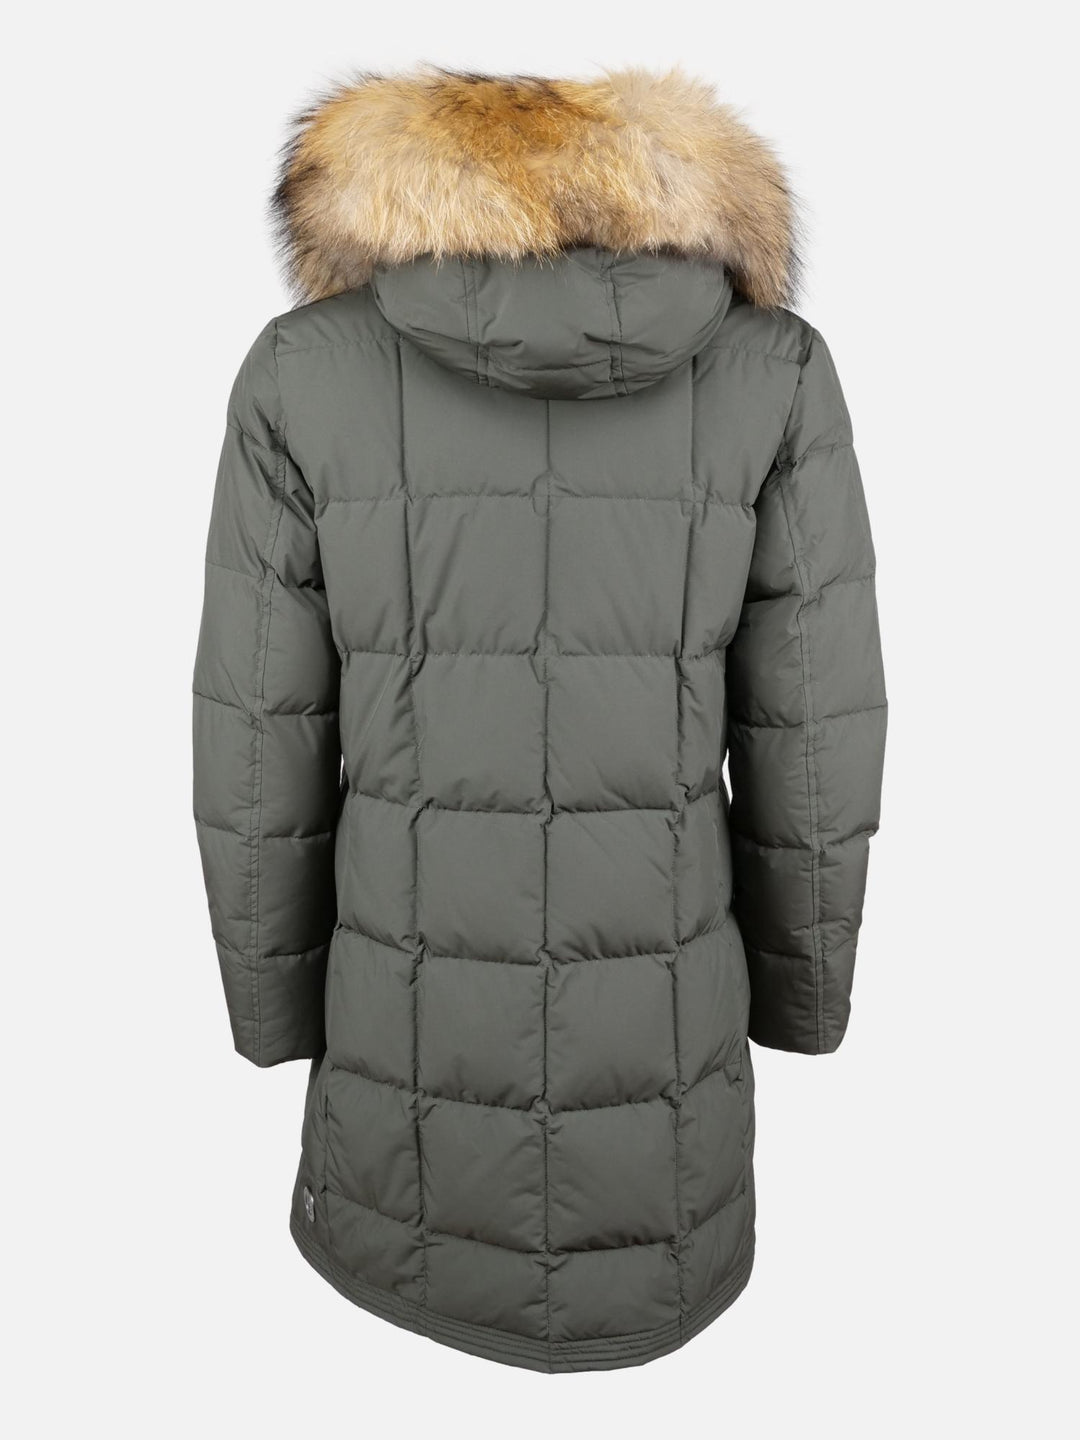 1403-500R - Army down coat with fur trim - women